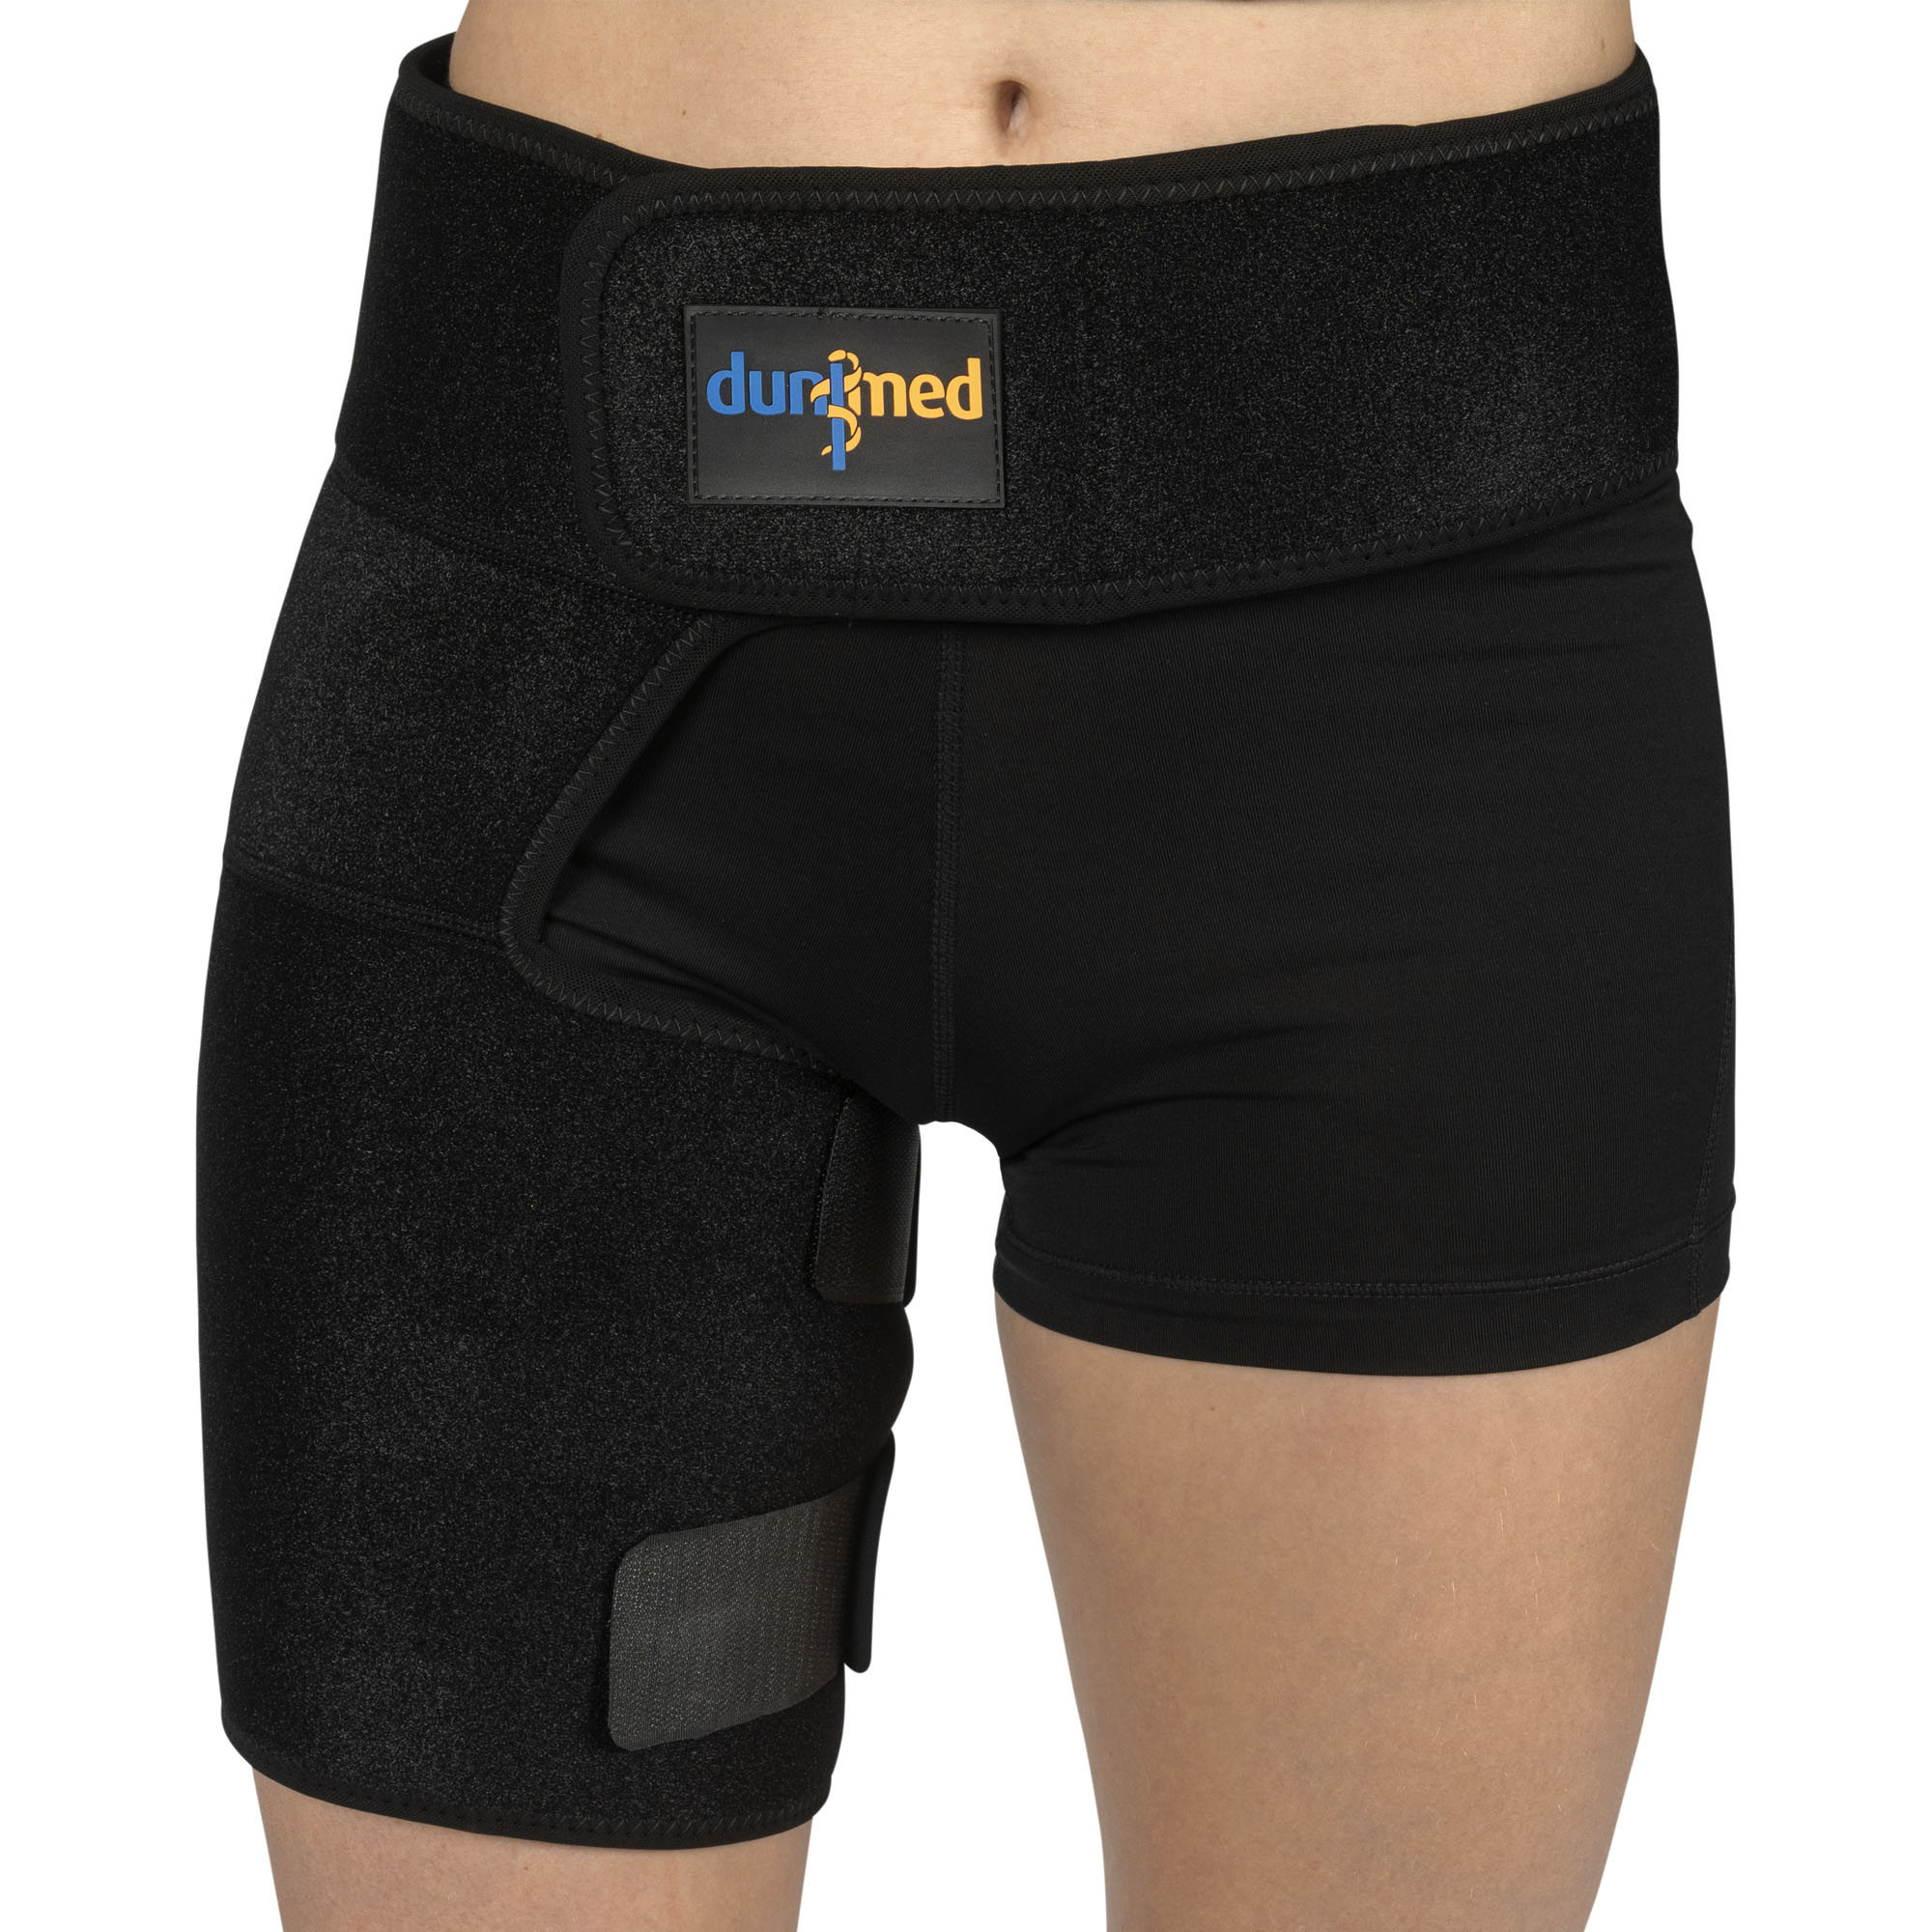 Dunimed Adjustable Hip Brace - Thigh